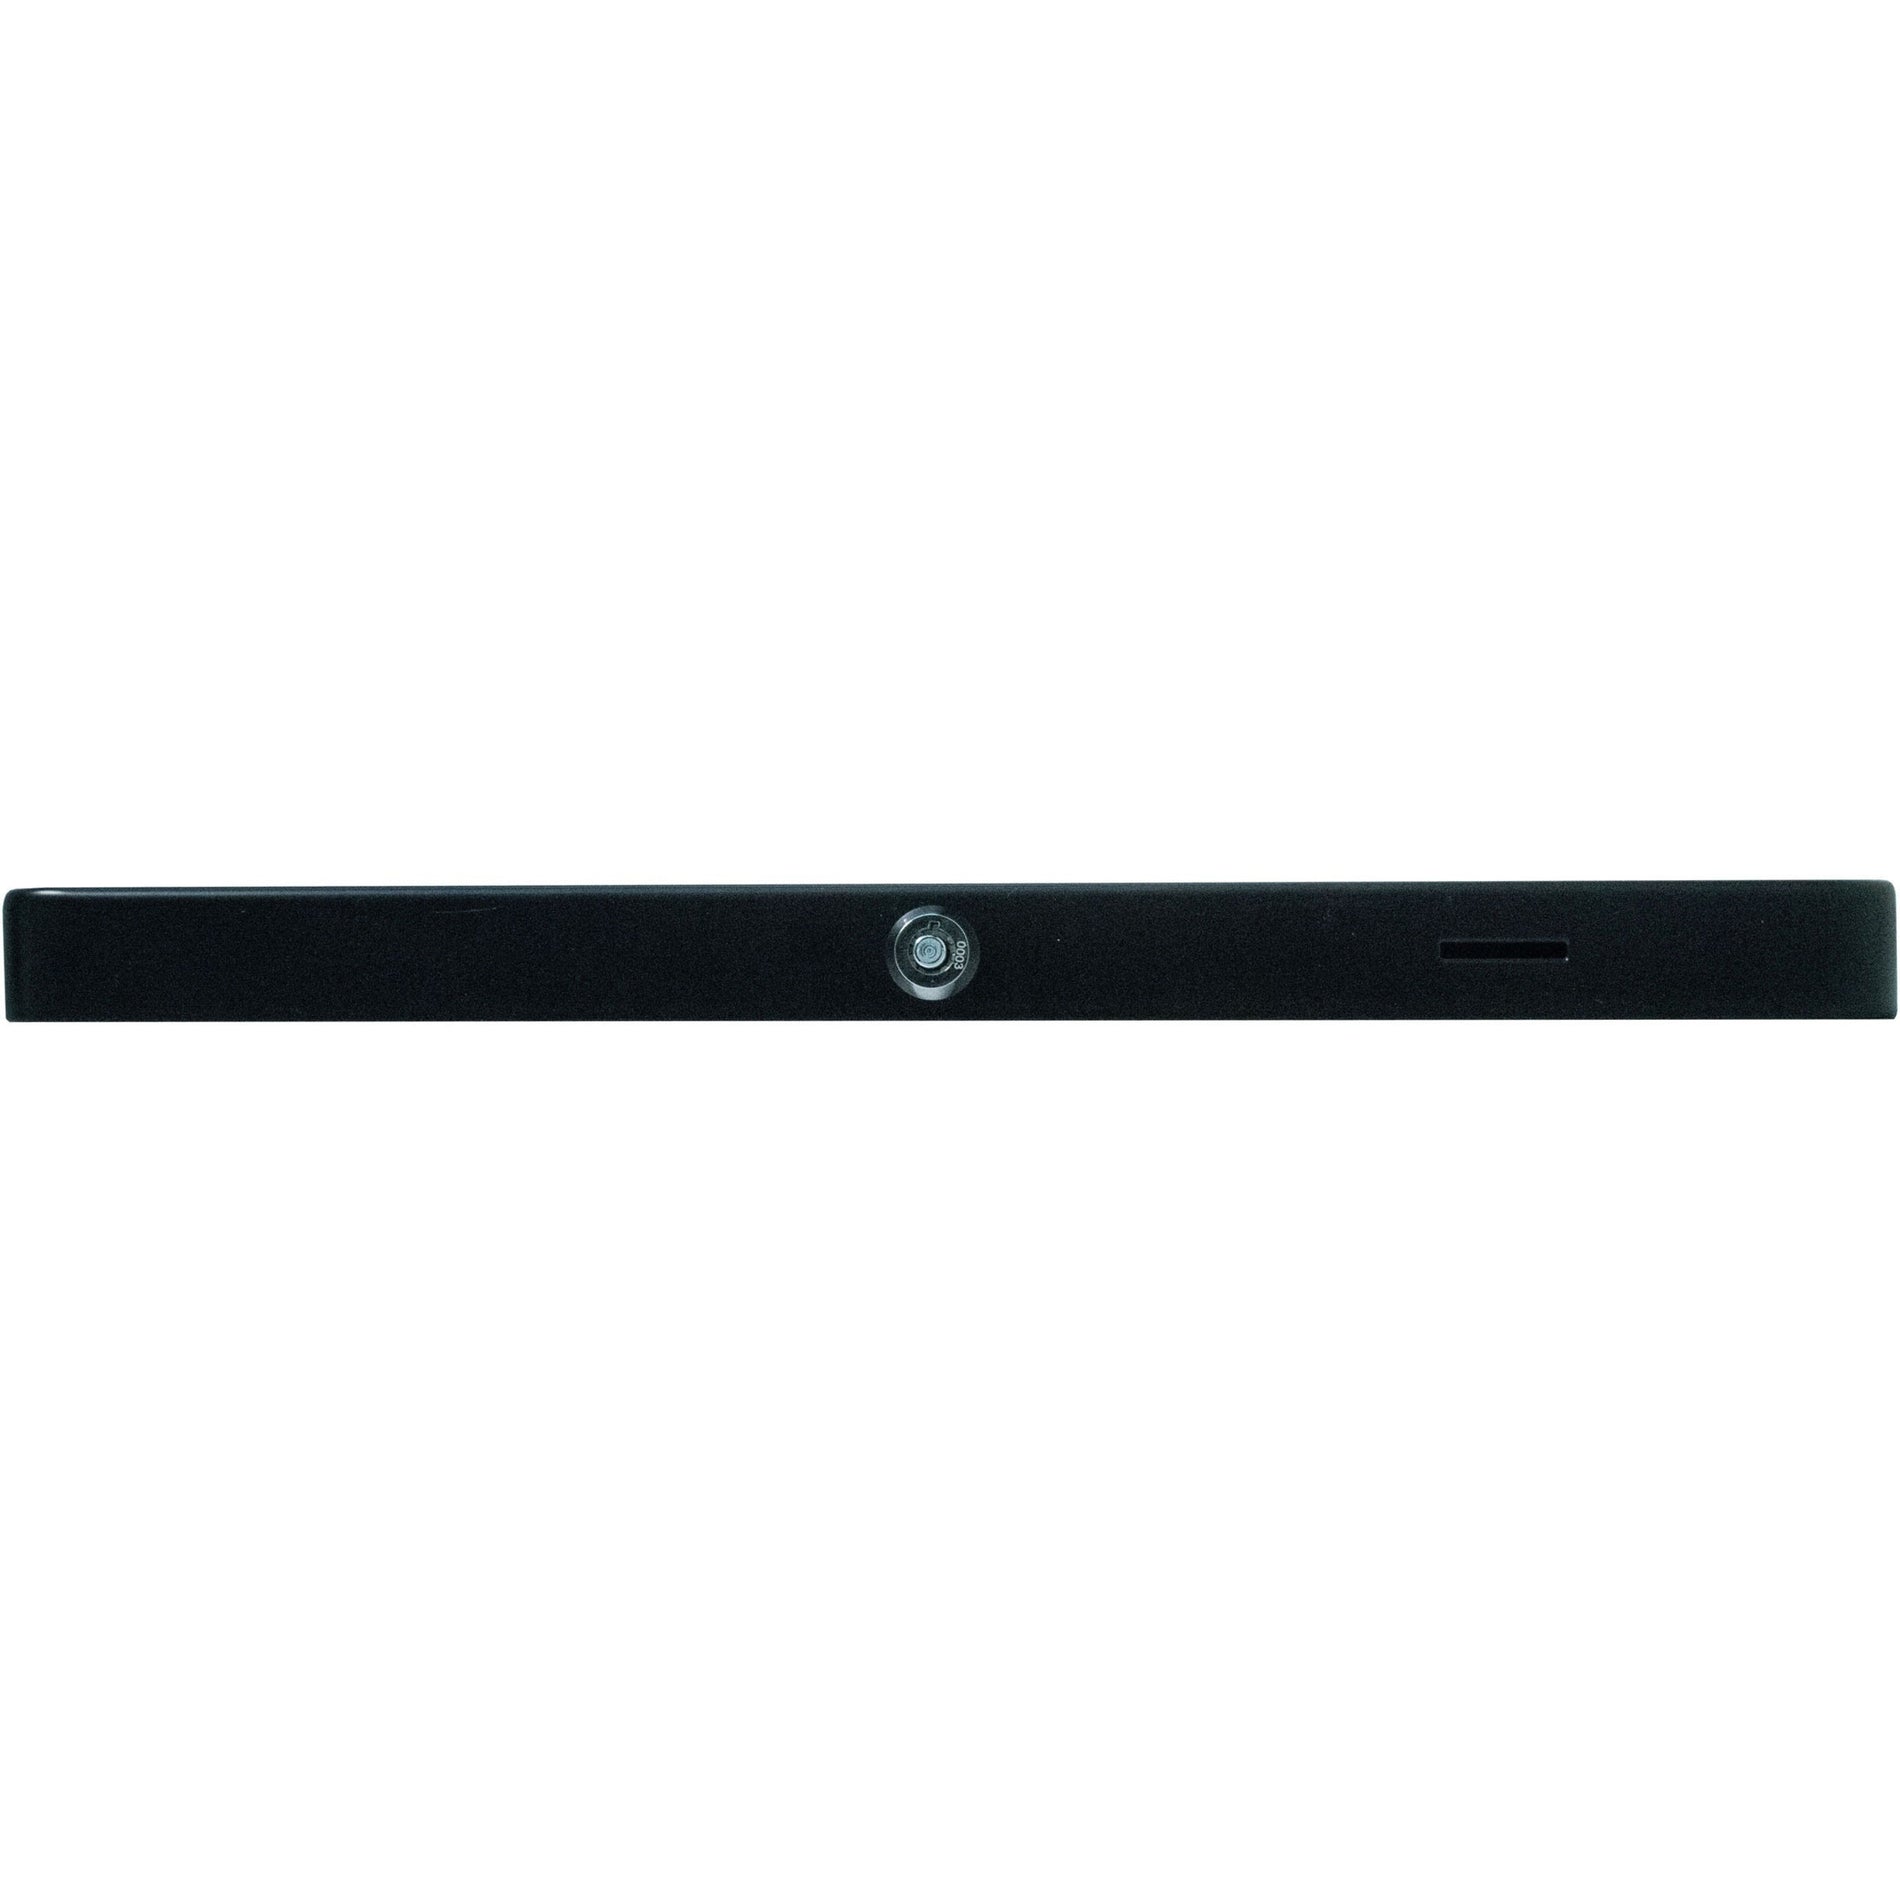 CTA Digital PAD-PLWB Premium Large Locking Wall Mount (Black), Heavy Duty, Theft Resistant, Cable Management